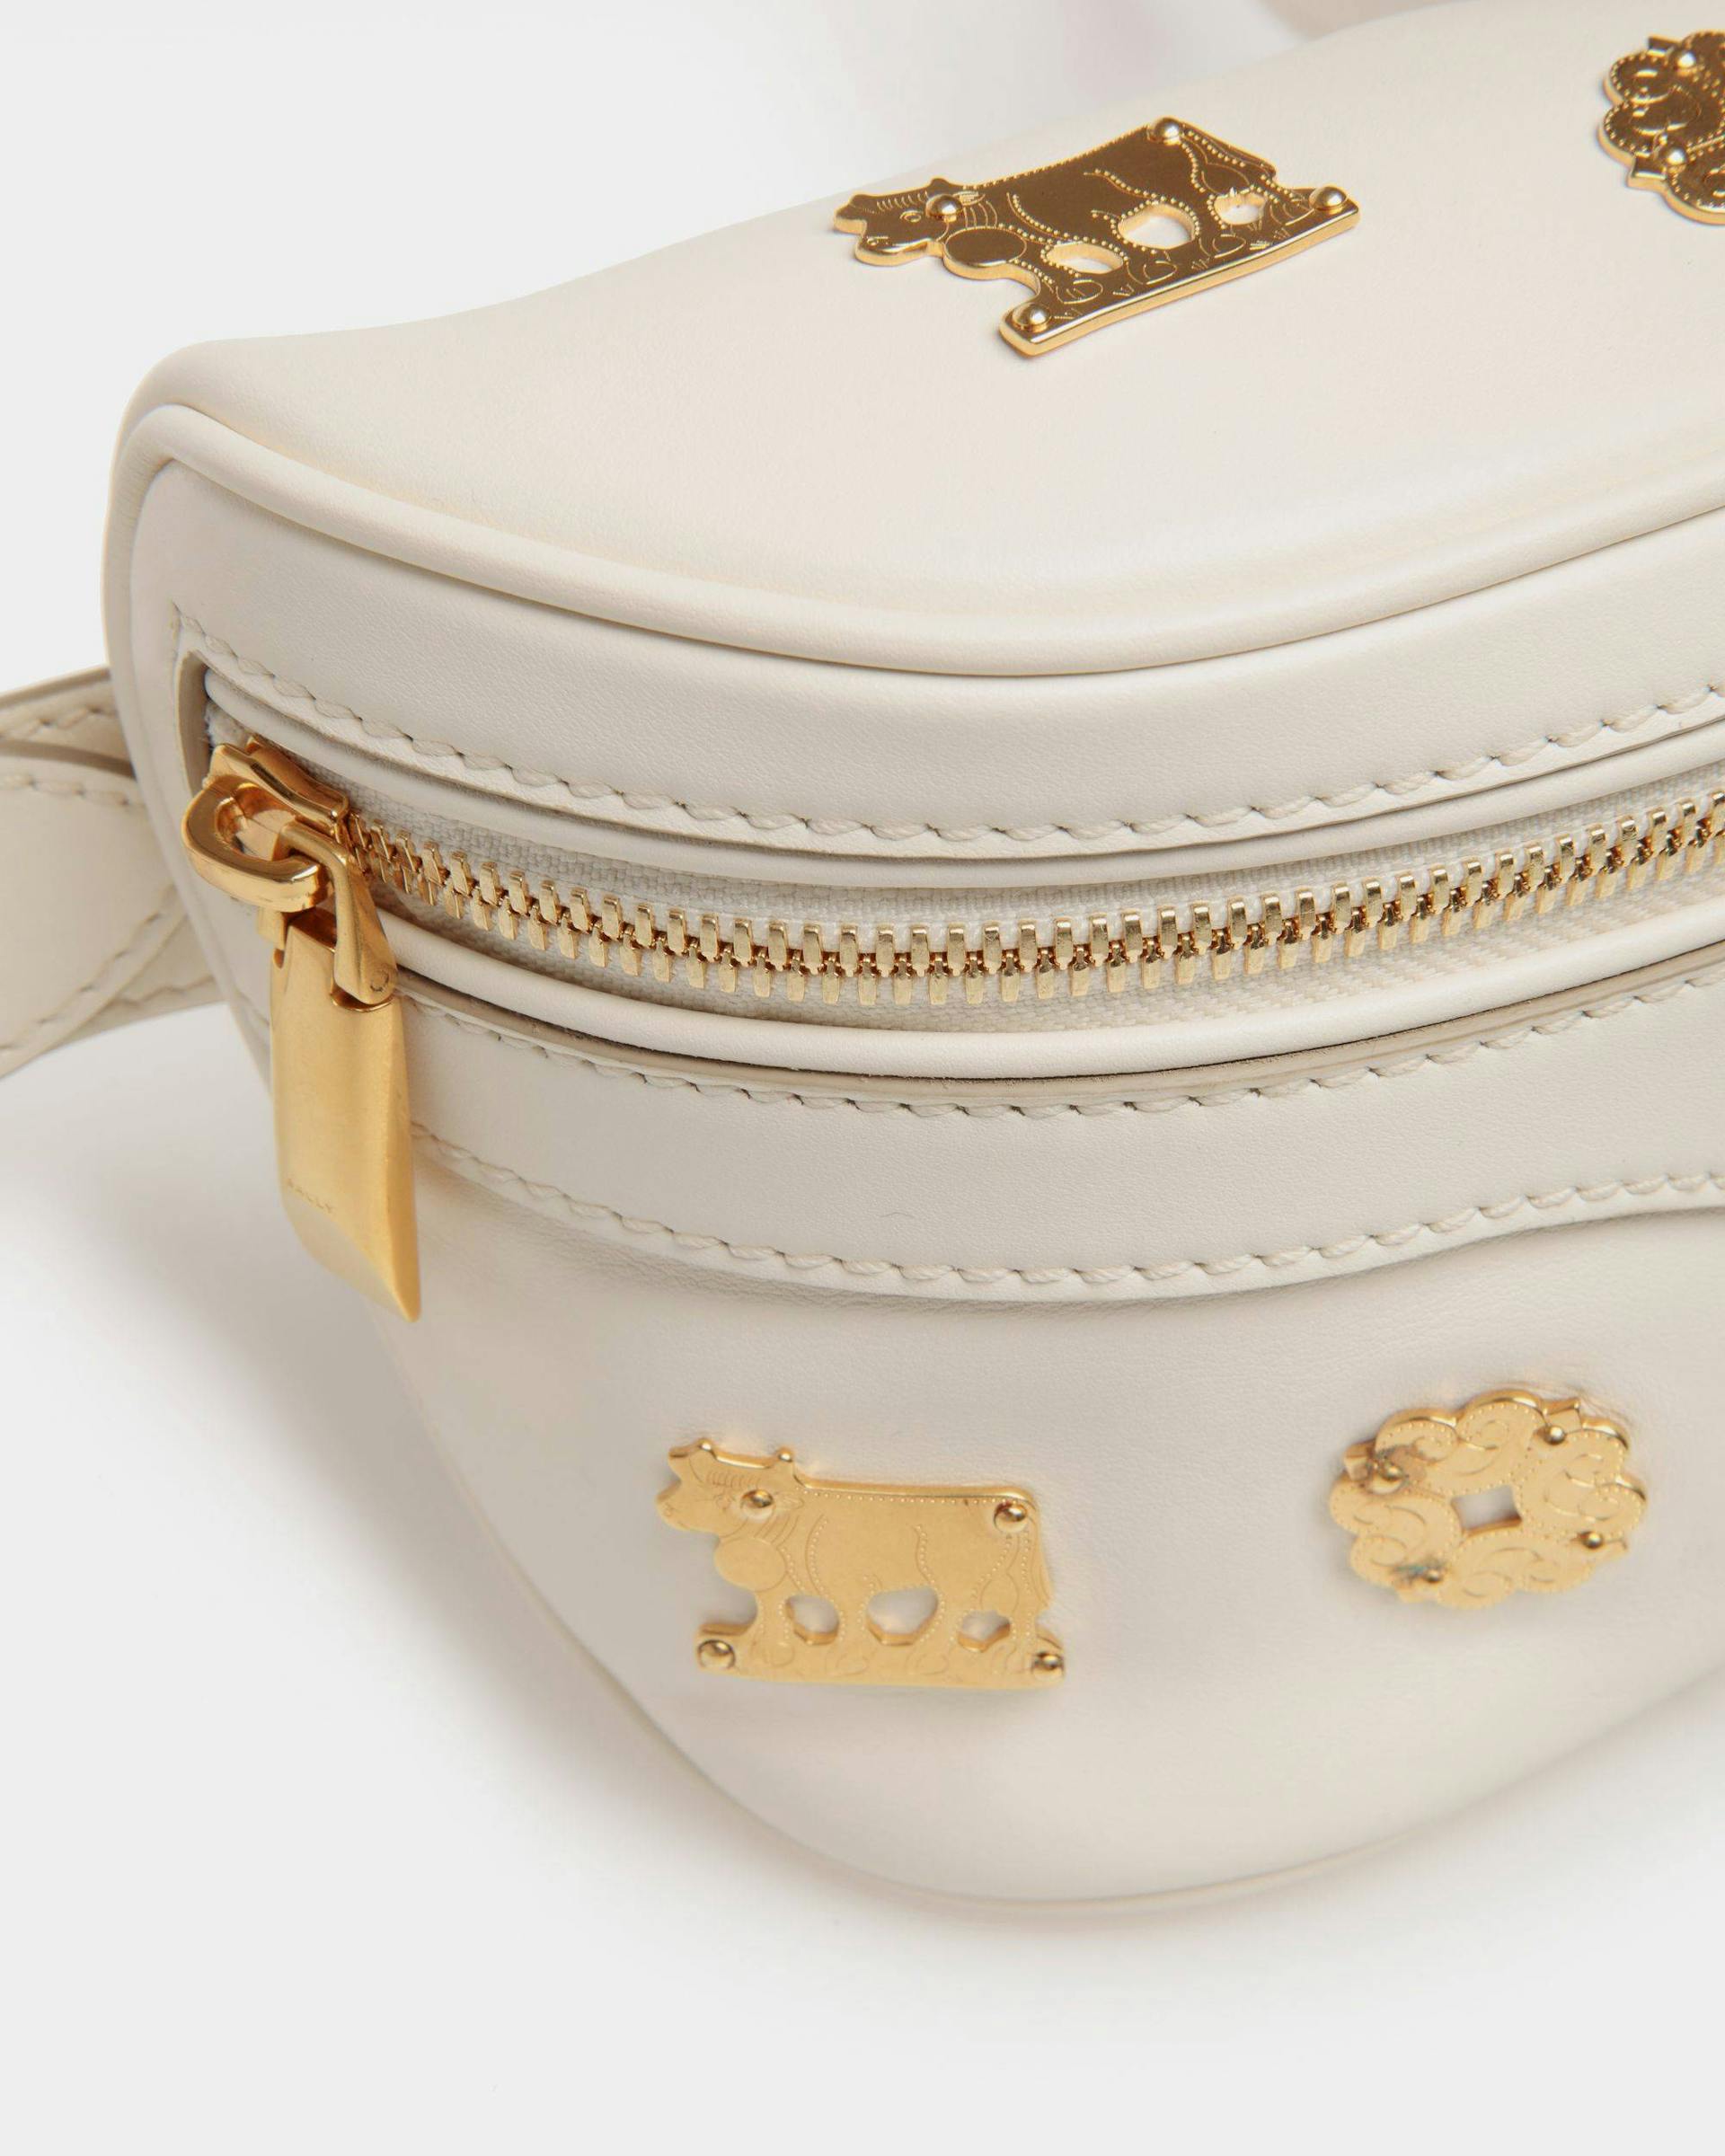 Women's Moutain Belt Bag  in White Leather | Bally | Still Life Detail